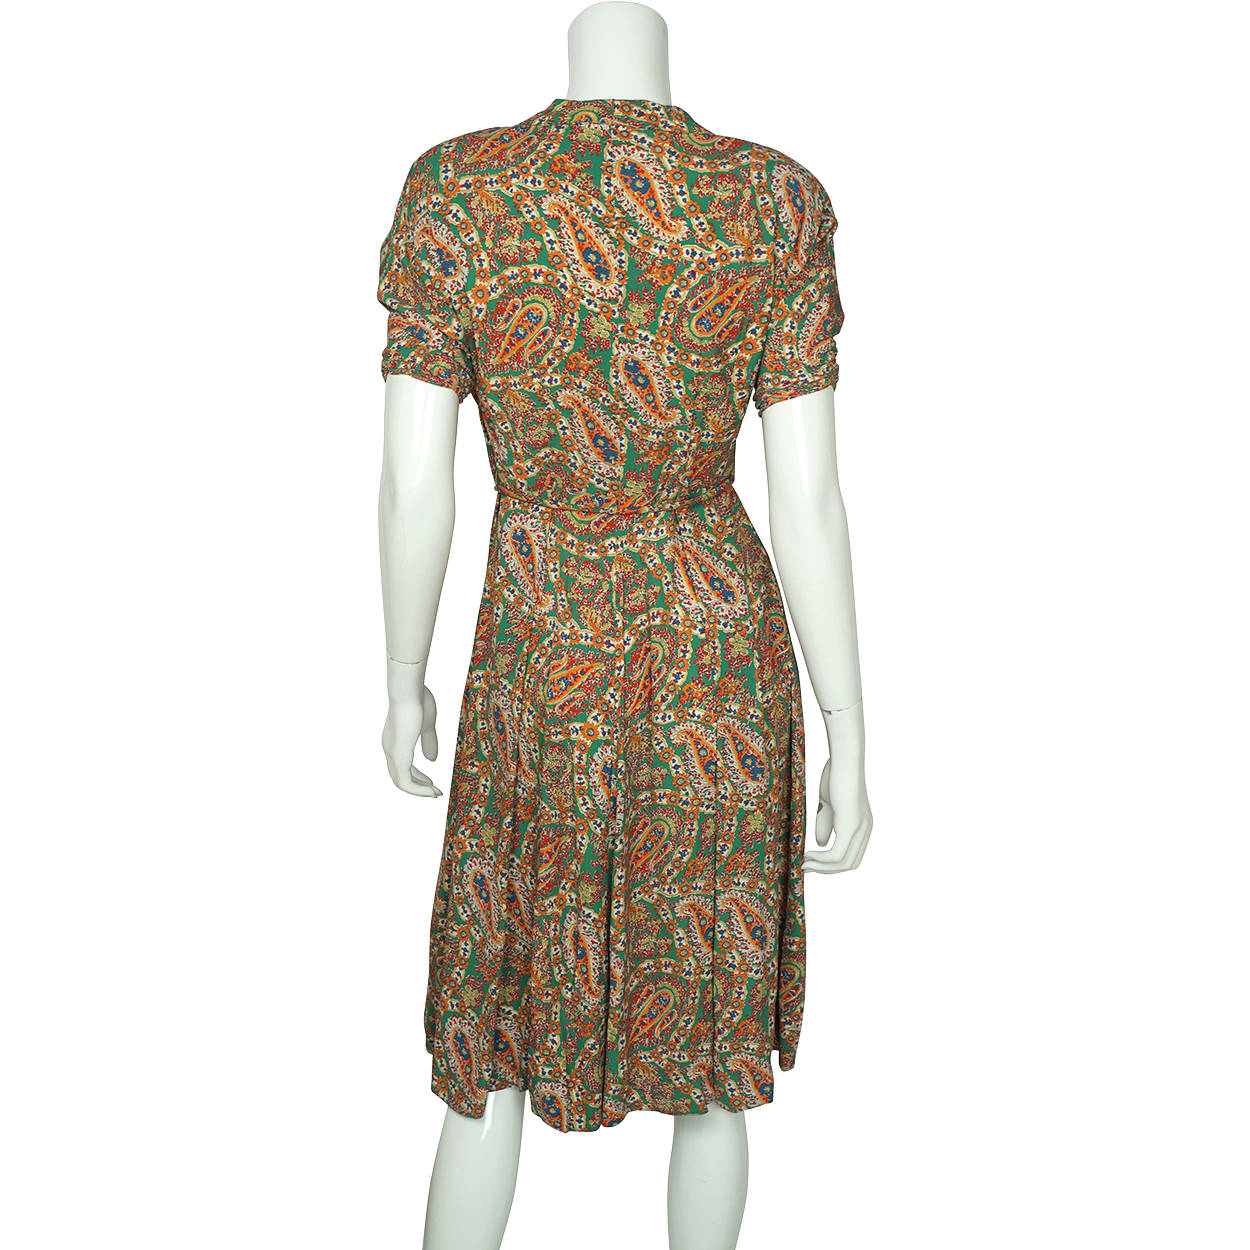 Vintage 1940s Day Dress Paisley Print Silk Crepe Size M